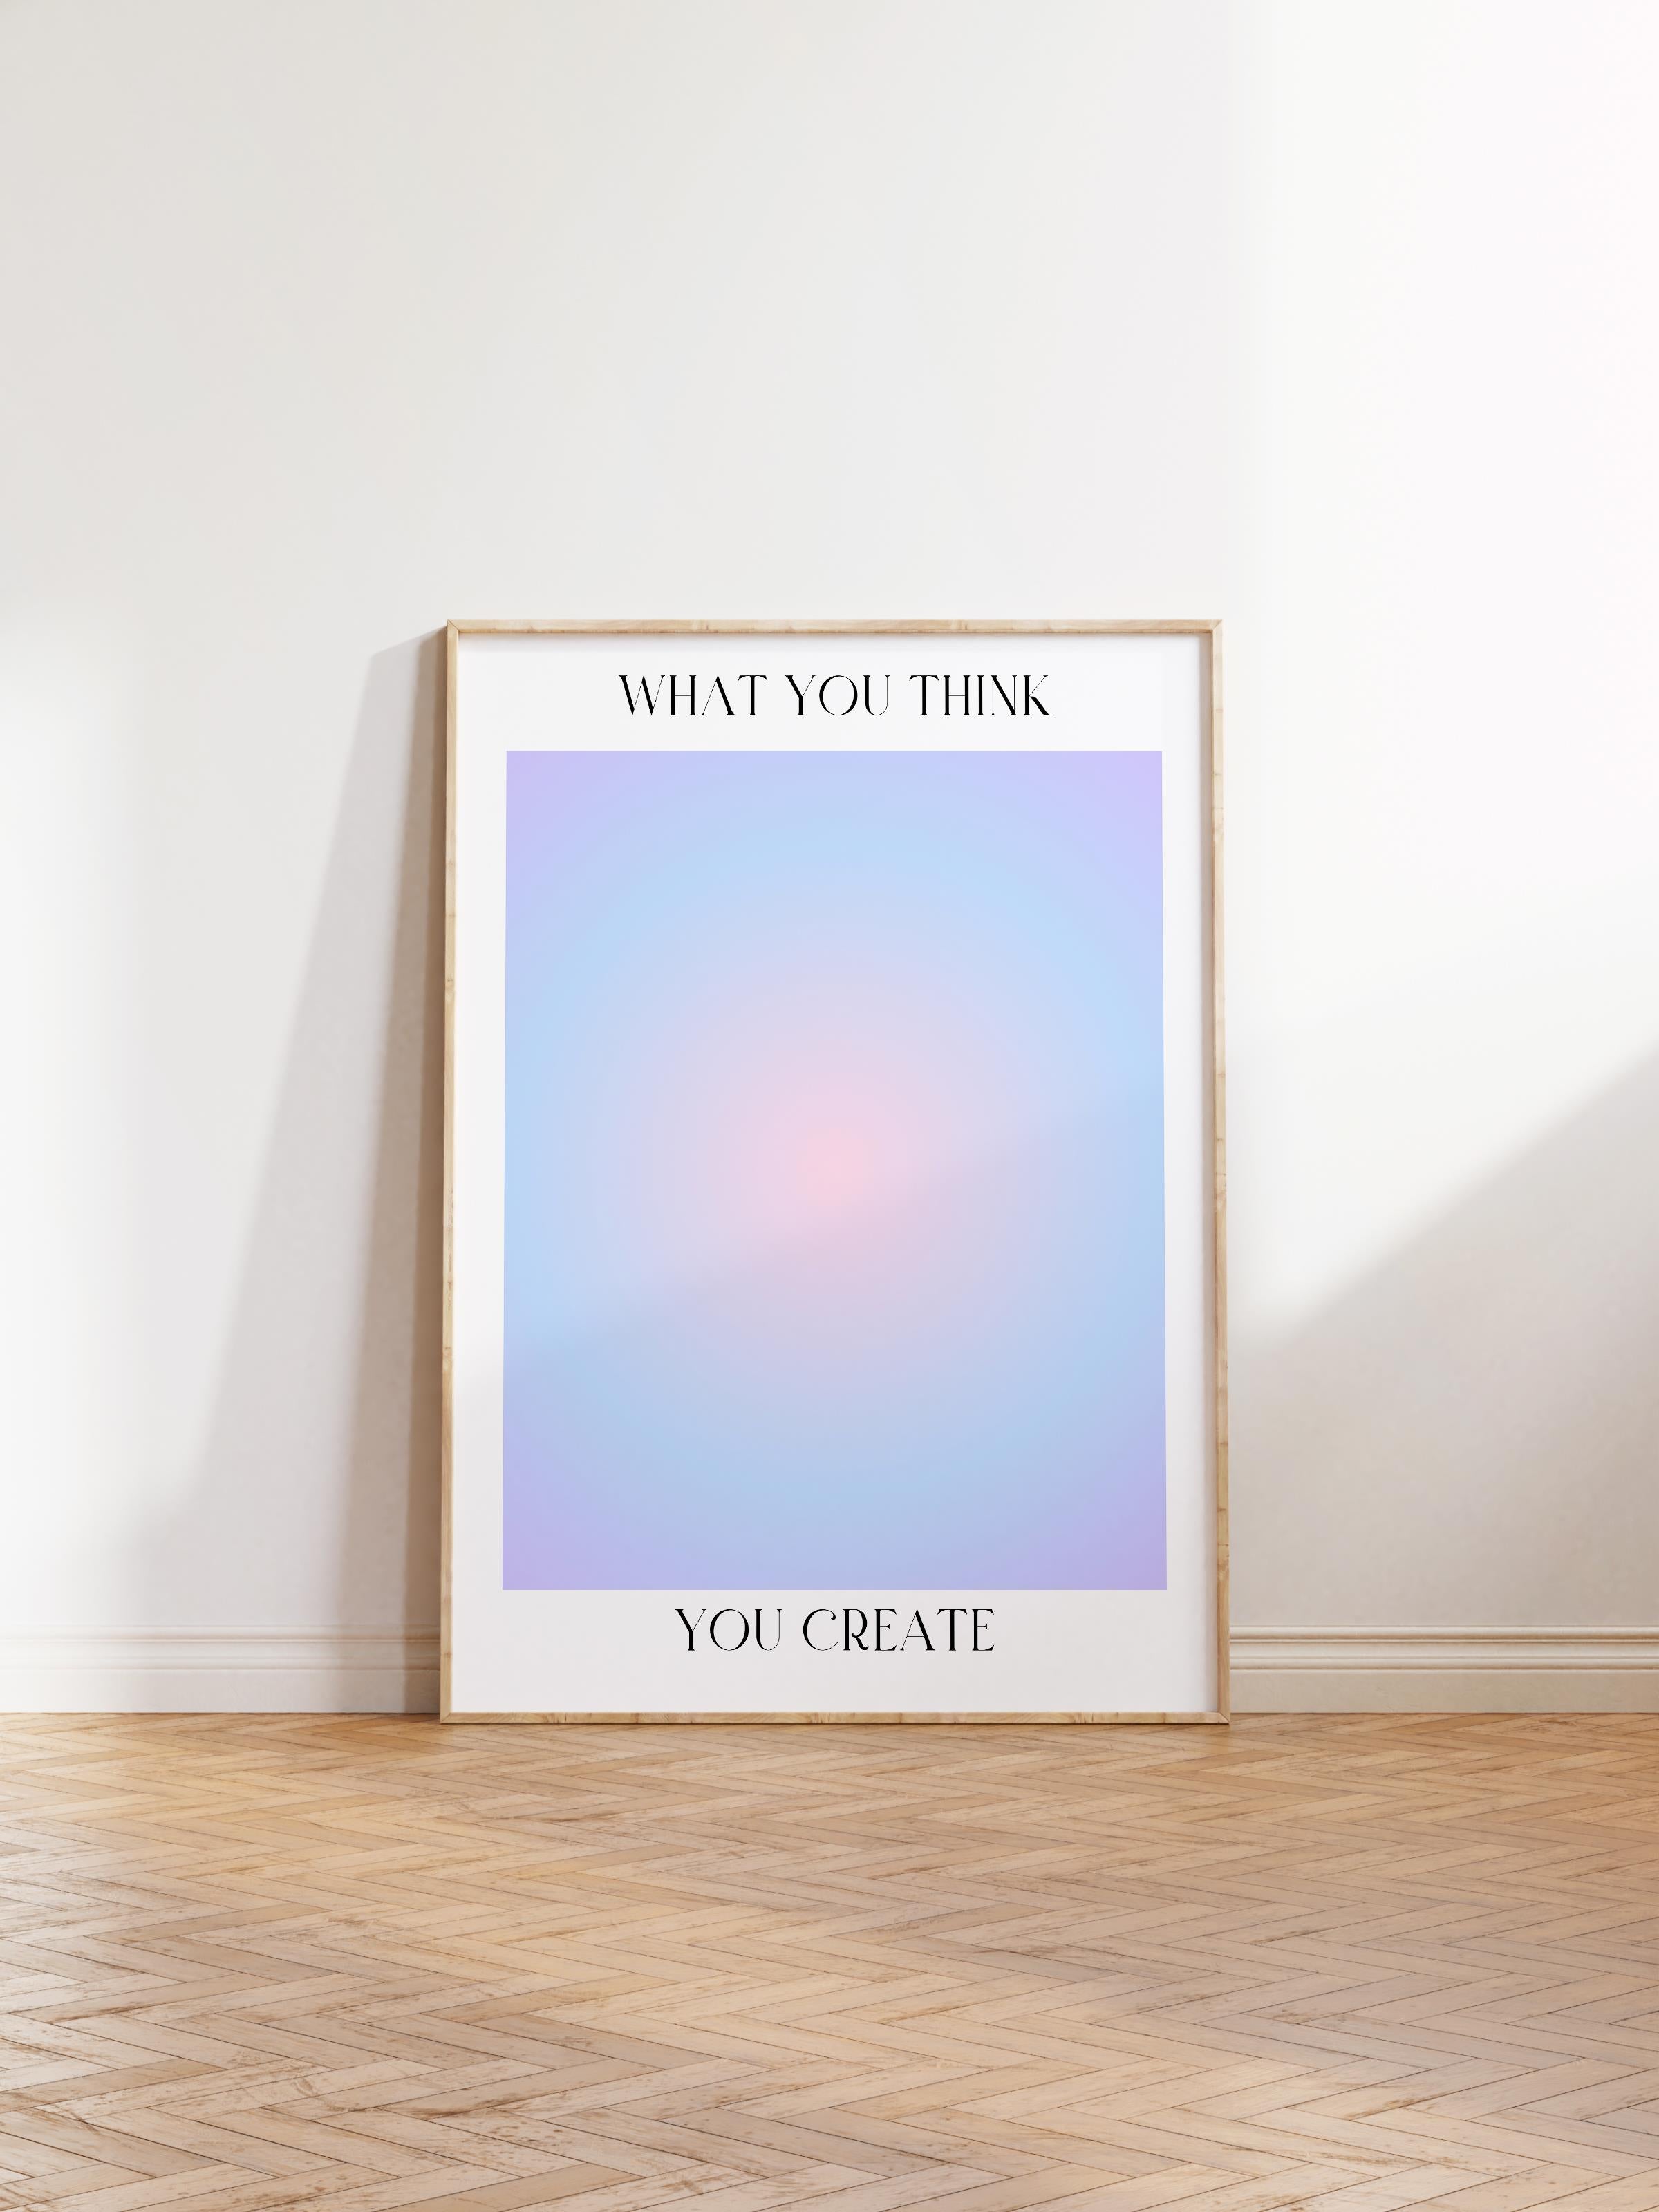 Çerçevesiz Poster, Aura Serisi NO:51 - What You Think, You Create, Melek Numaraları, Renkli Poster